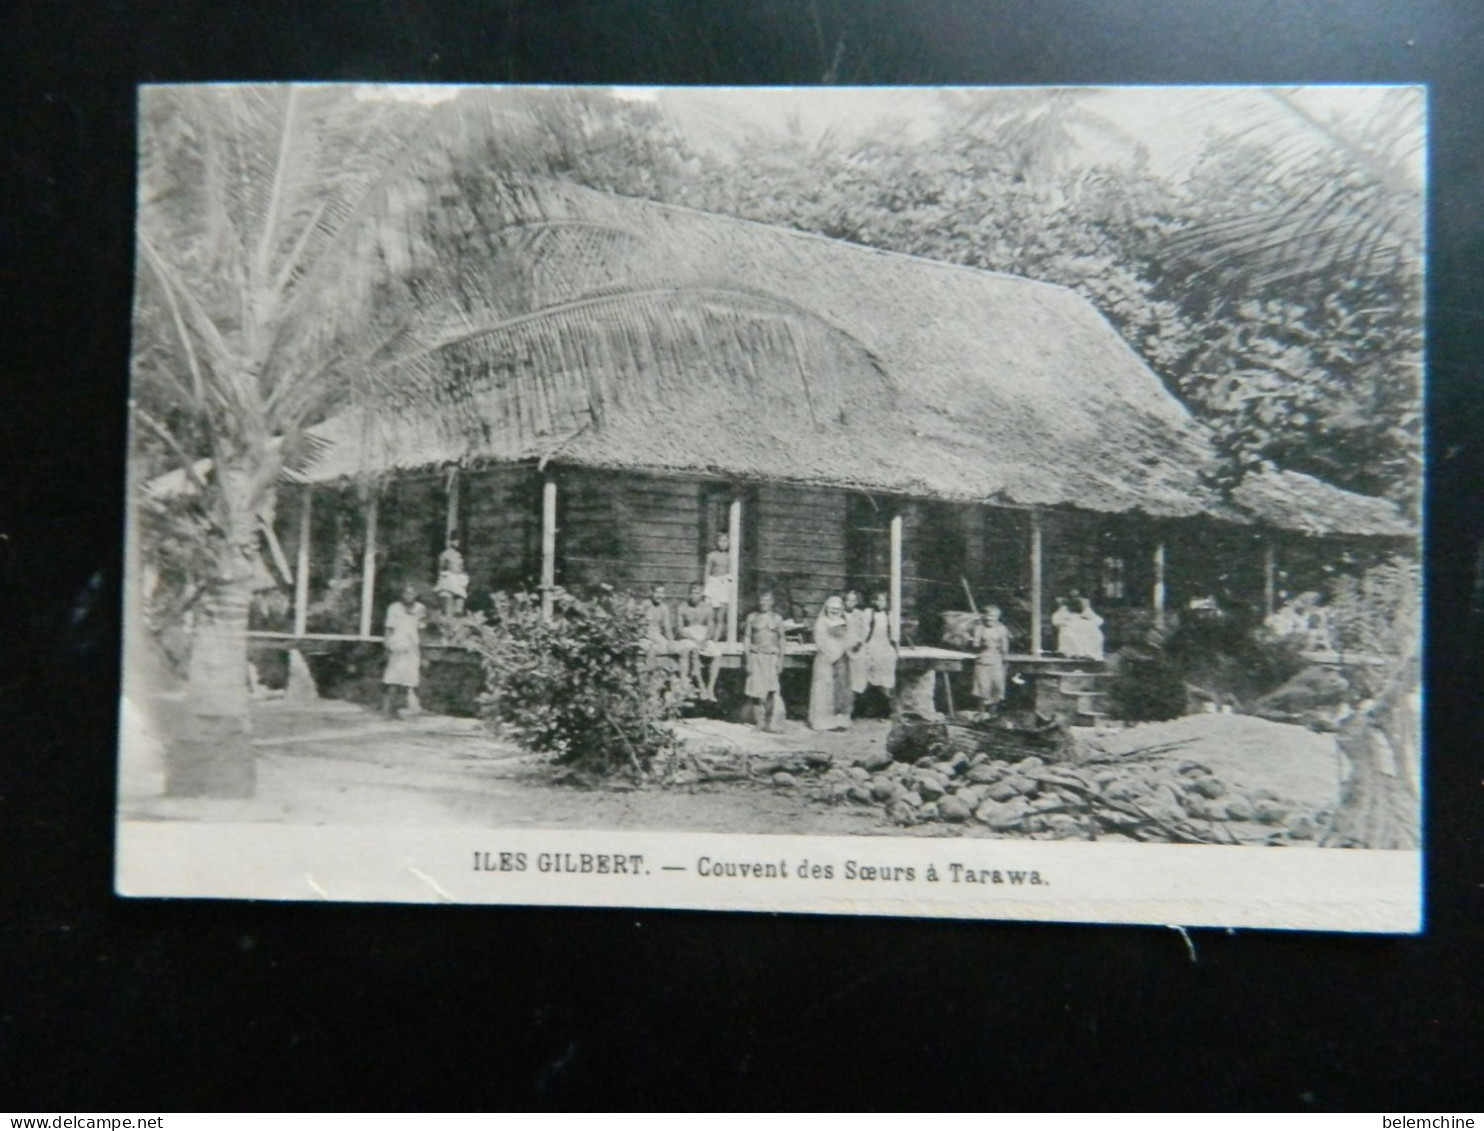 ILES GILBERT                                COUVENT DES SOEURS A TARAWA - Micronesia